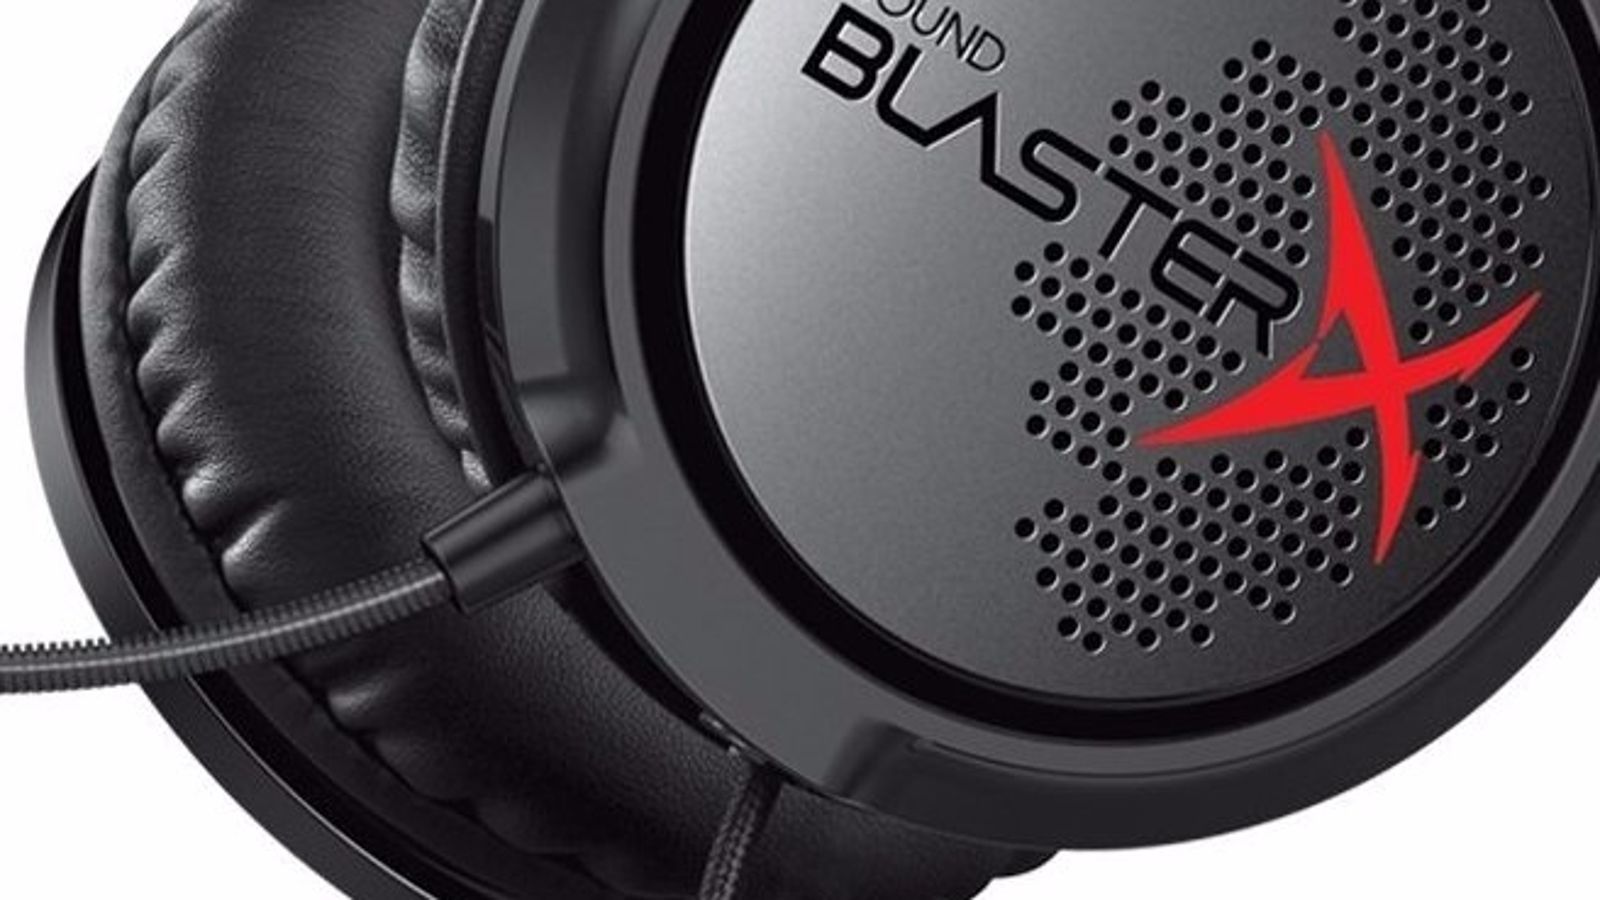 Creative Sound BlasterX H3 Gaming Headset - Test